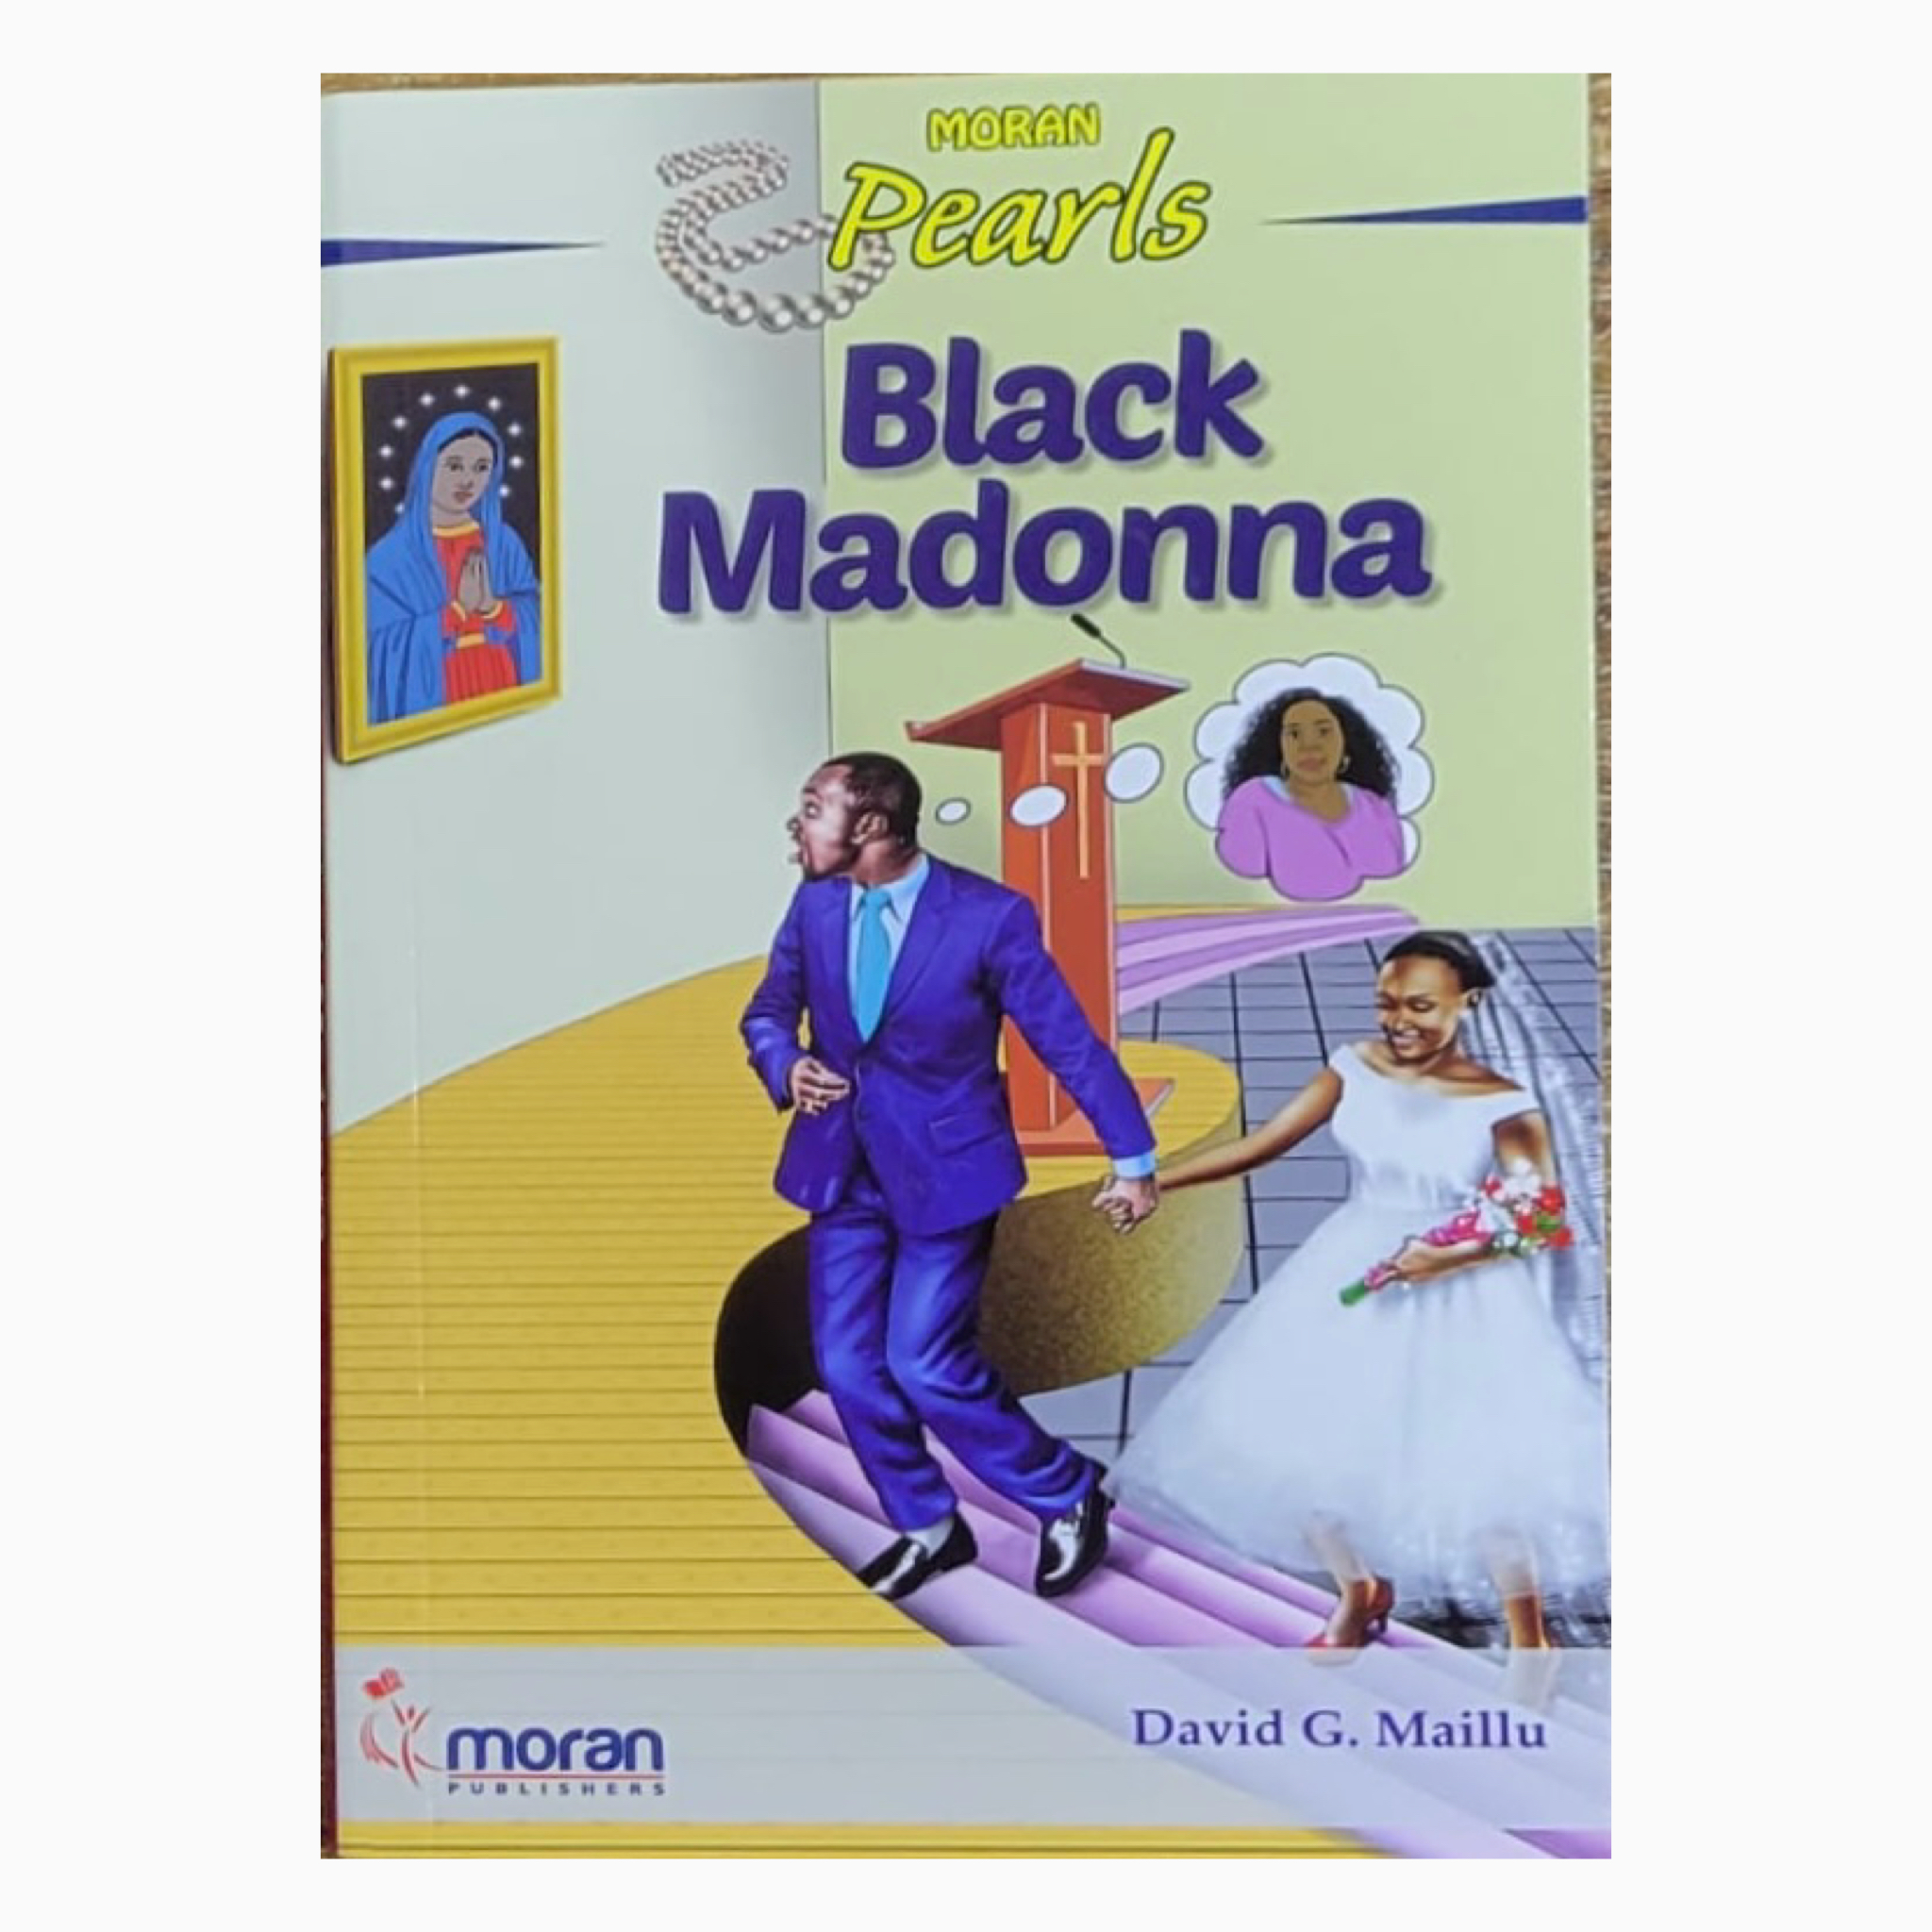 Black Madonna book by David G. Maillu